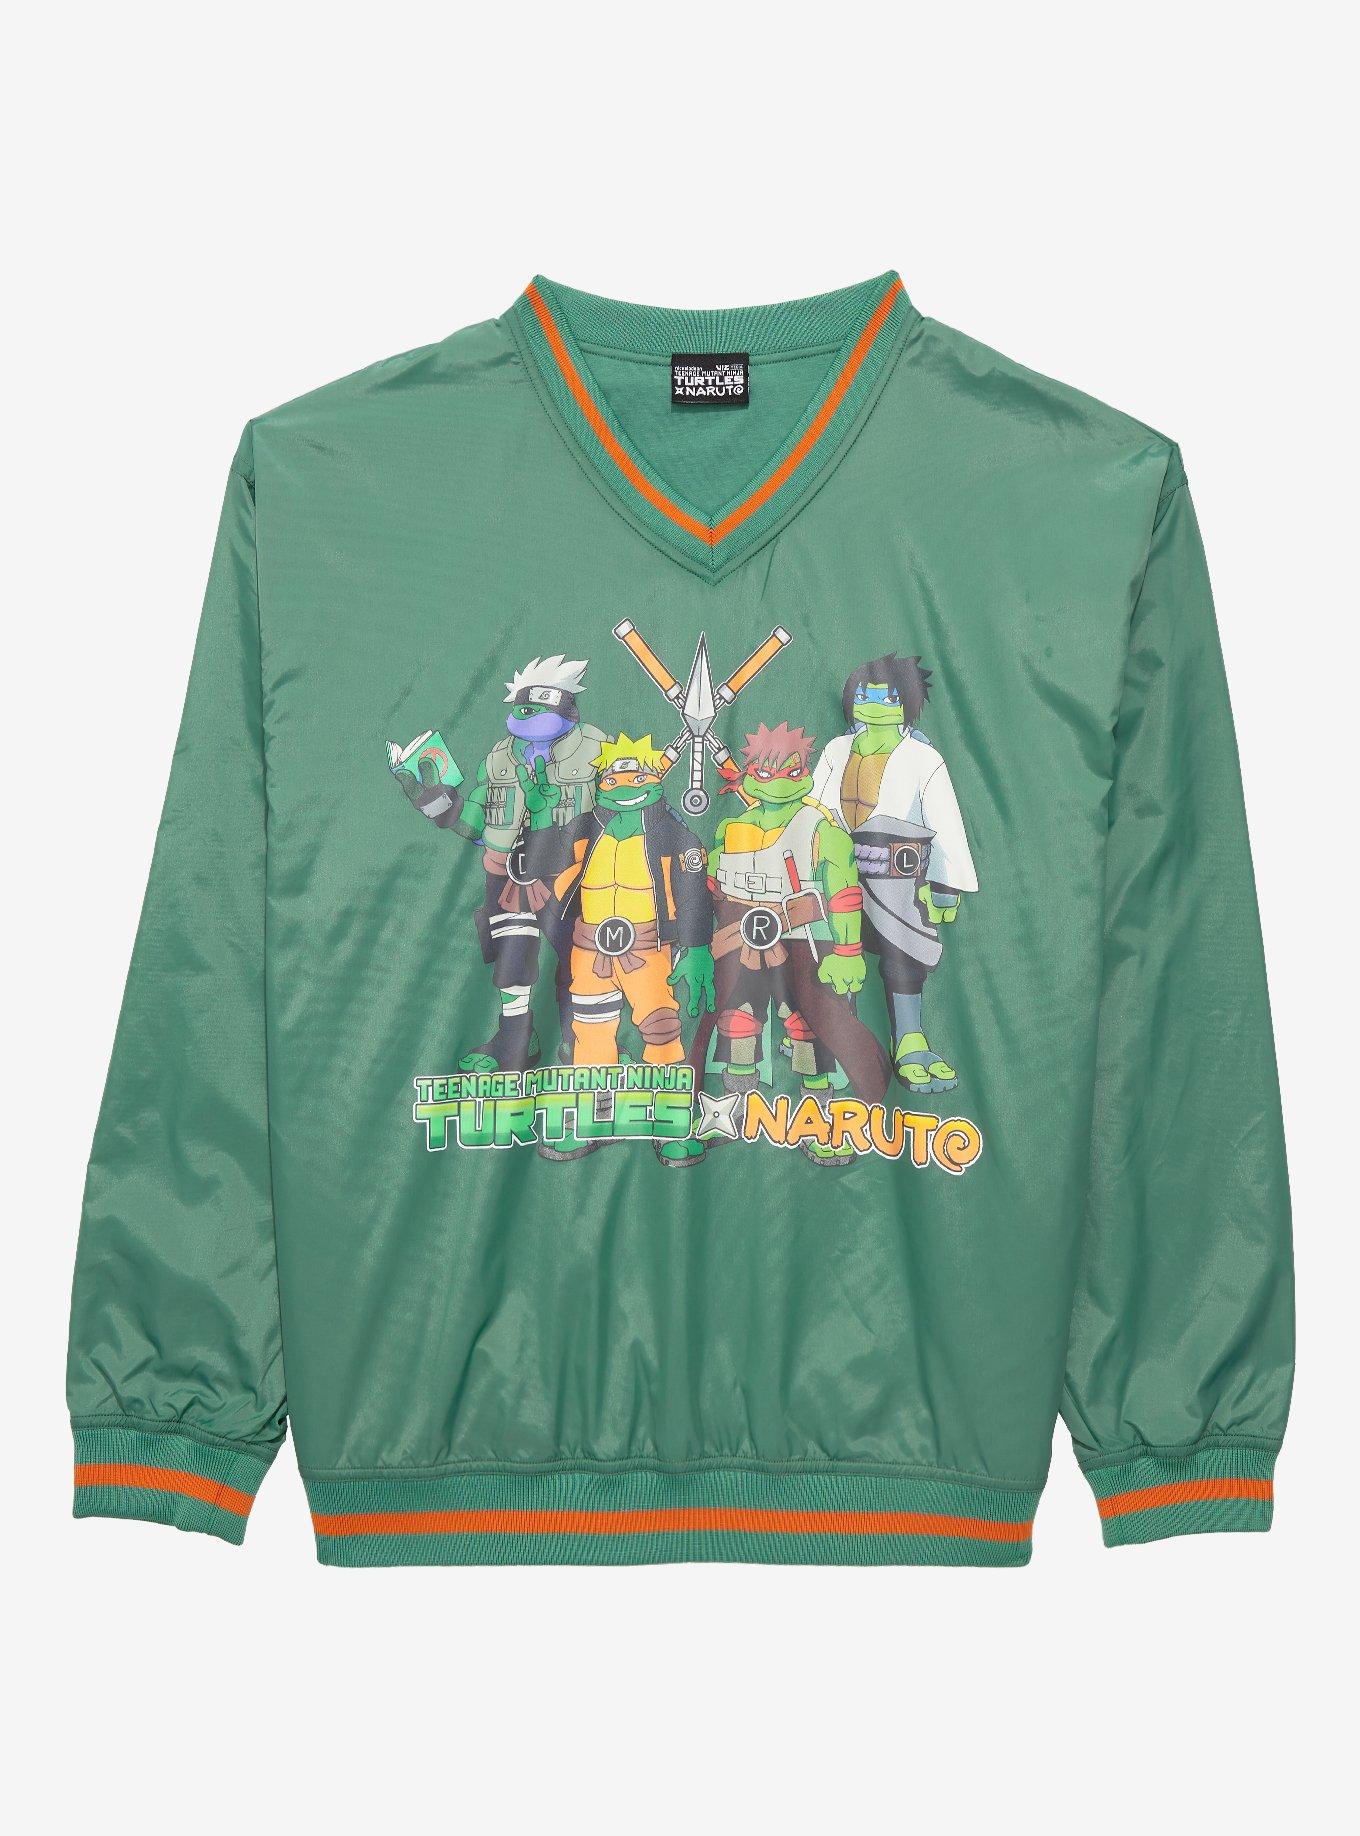 Teenage Mutant Ninja Turtles x Stranger Things Issue Shirt